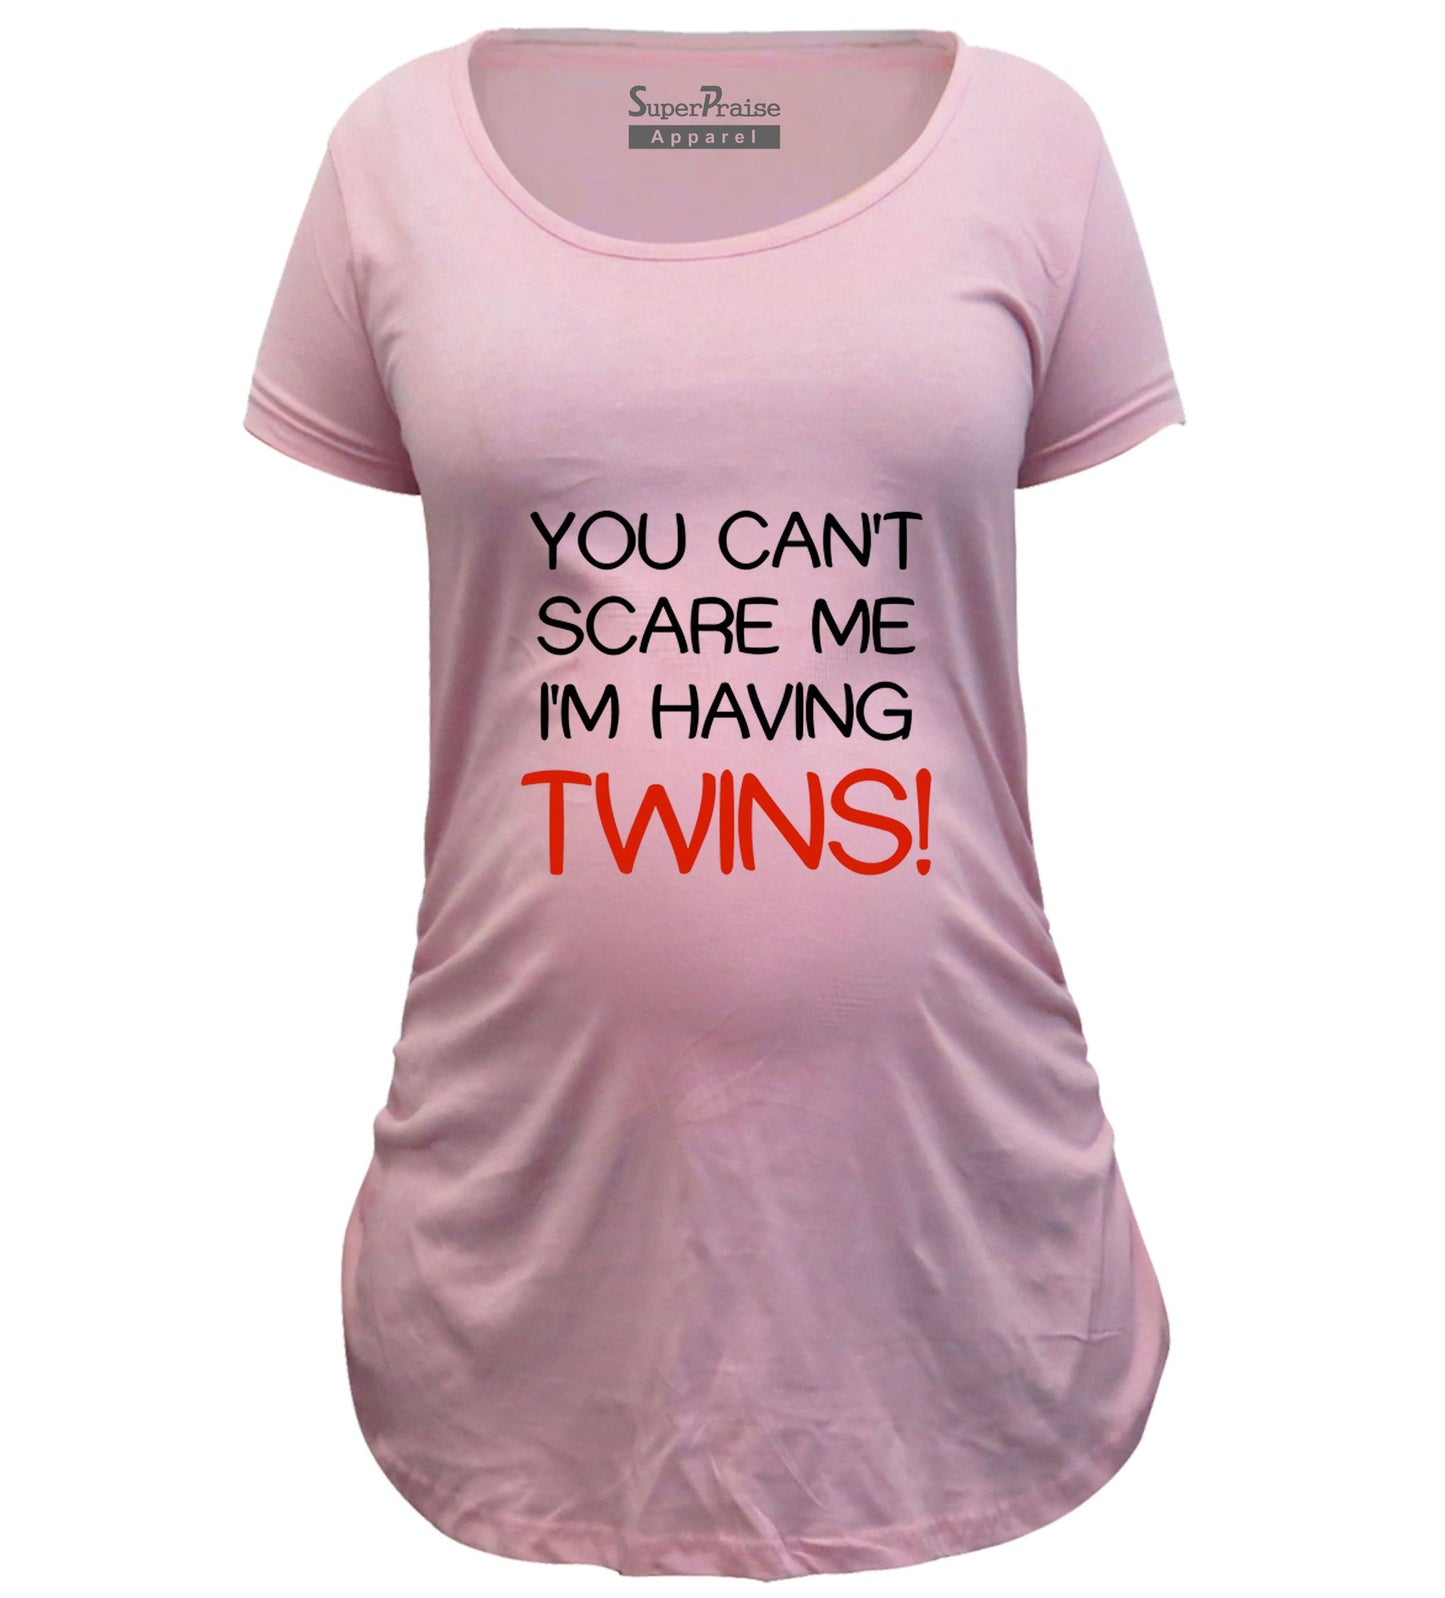 Twin Babies Maternity Pregnancy T Shirts